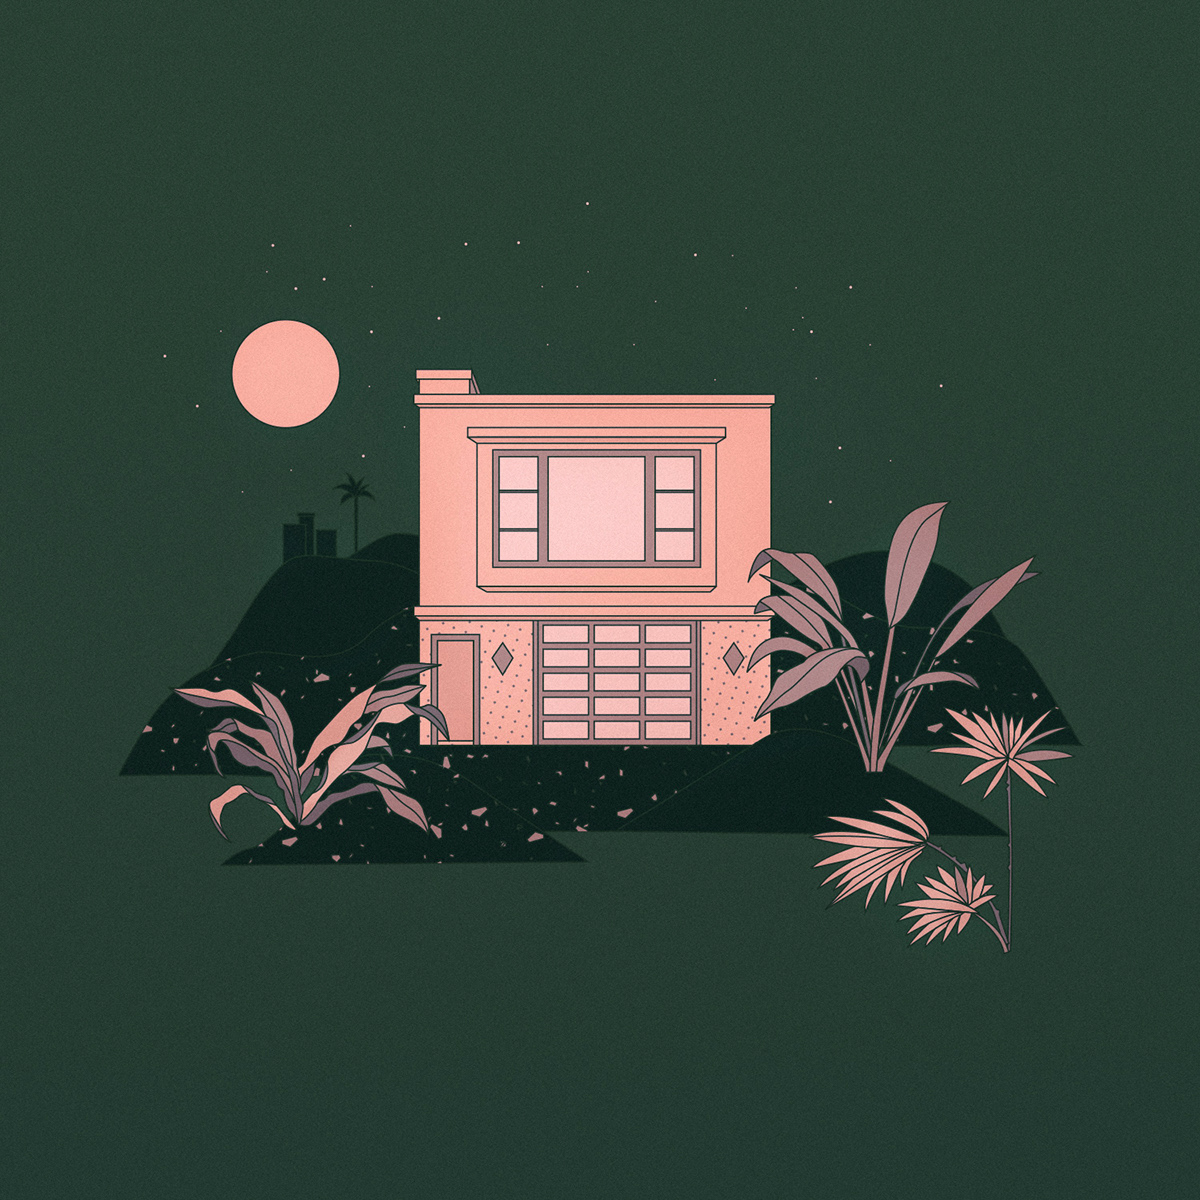 buildings architecture plants Tropical night Nightsky graphicillustration vector diner Landscape